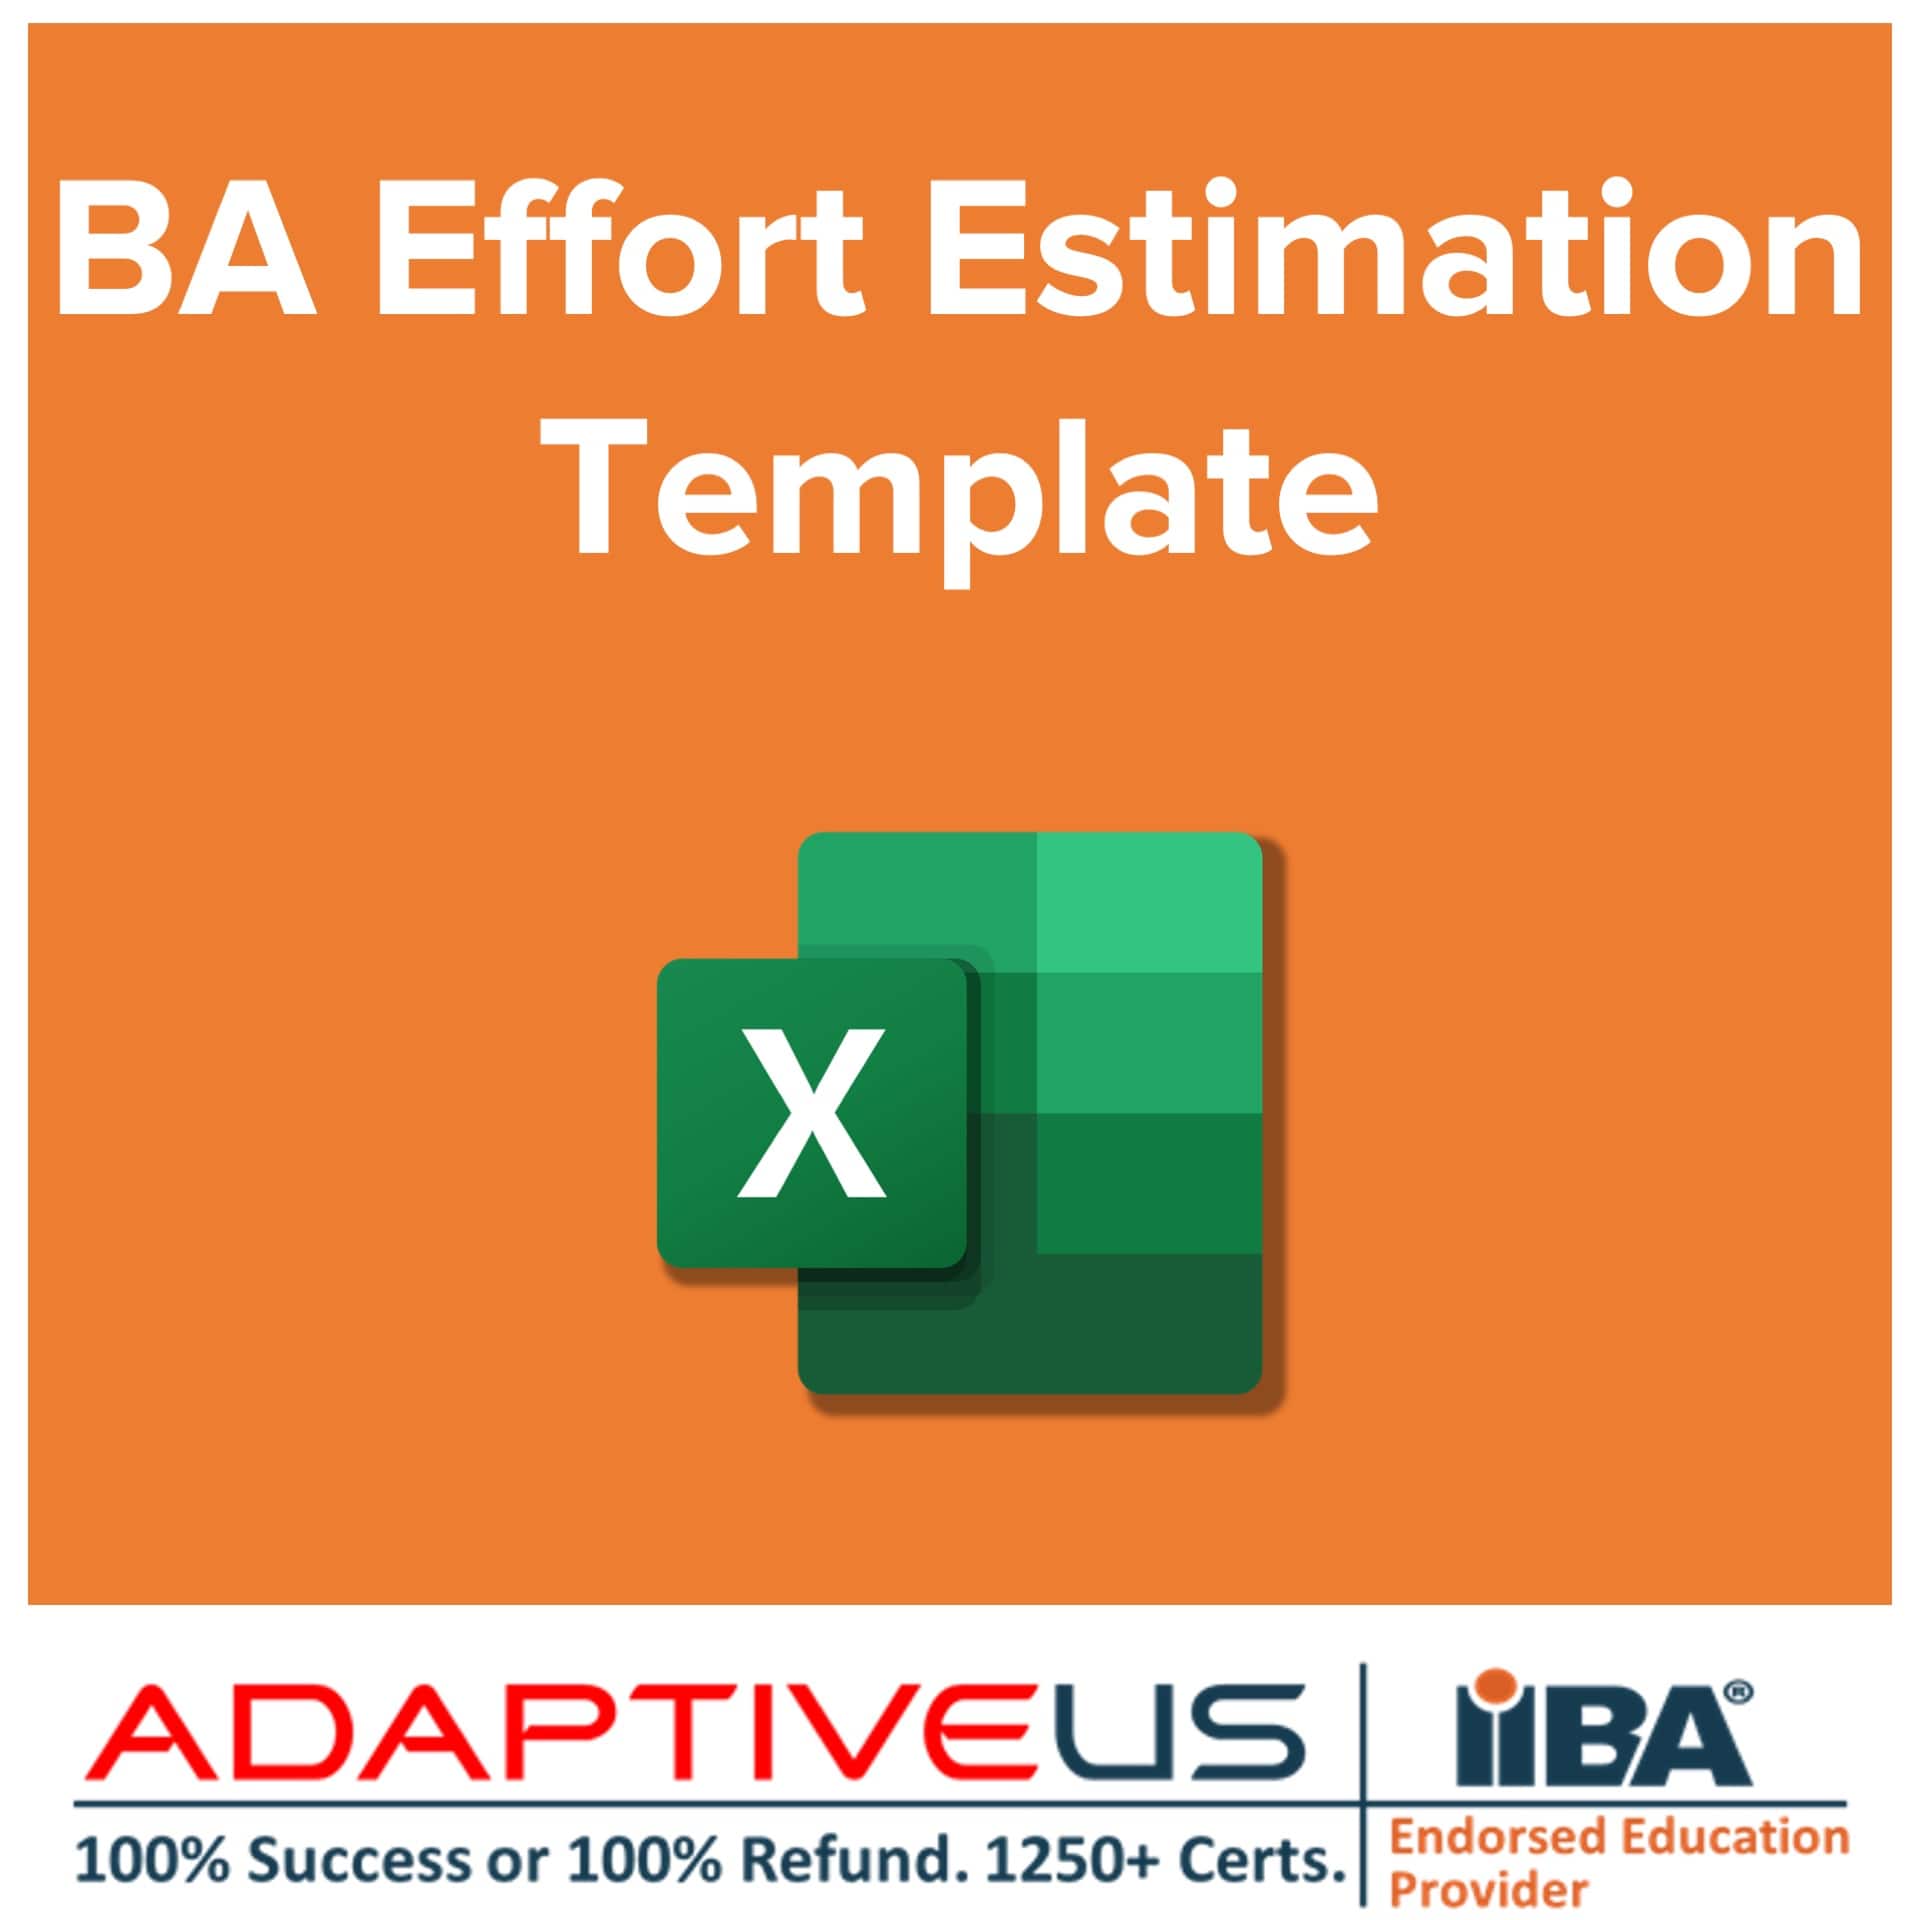 BA Effort Estimation Template